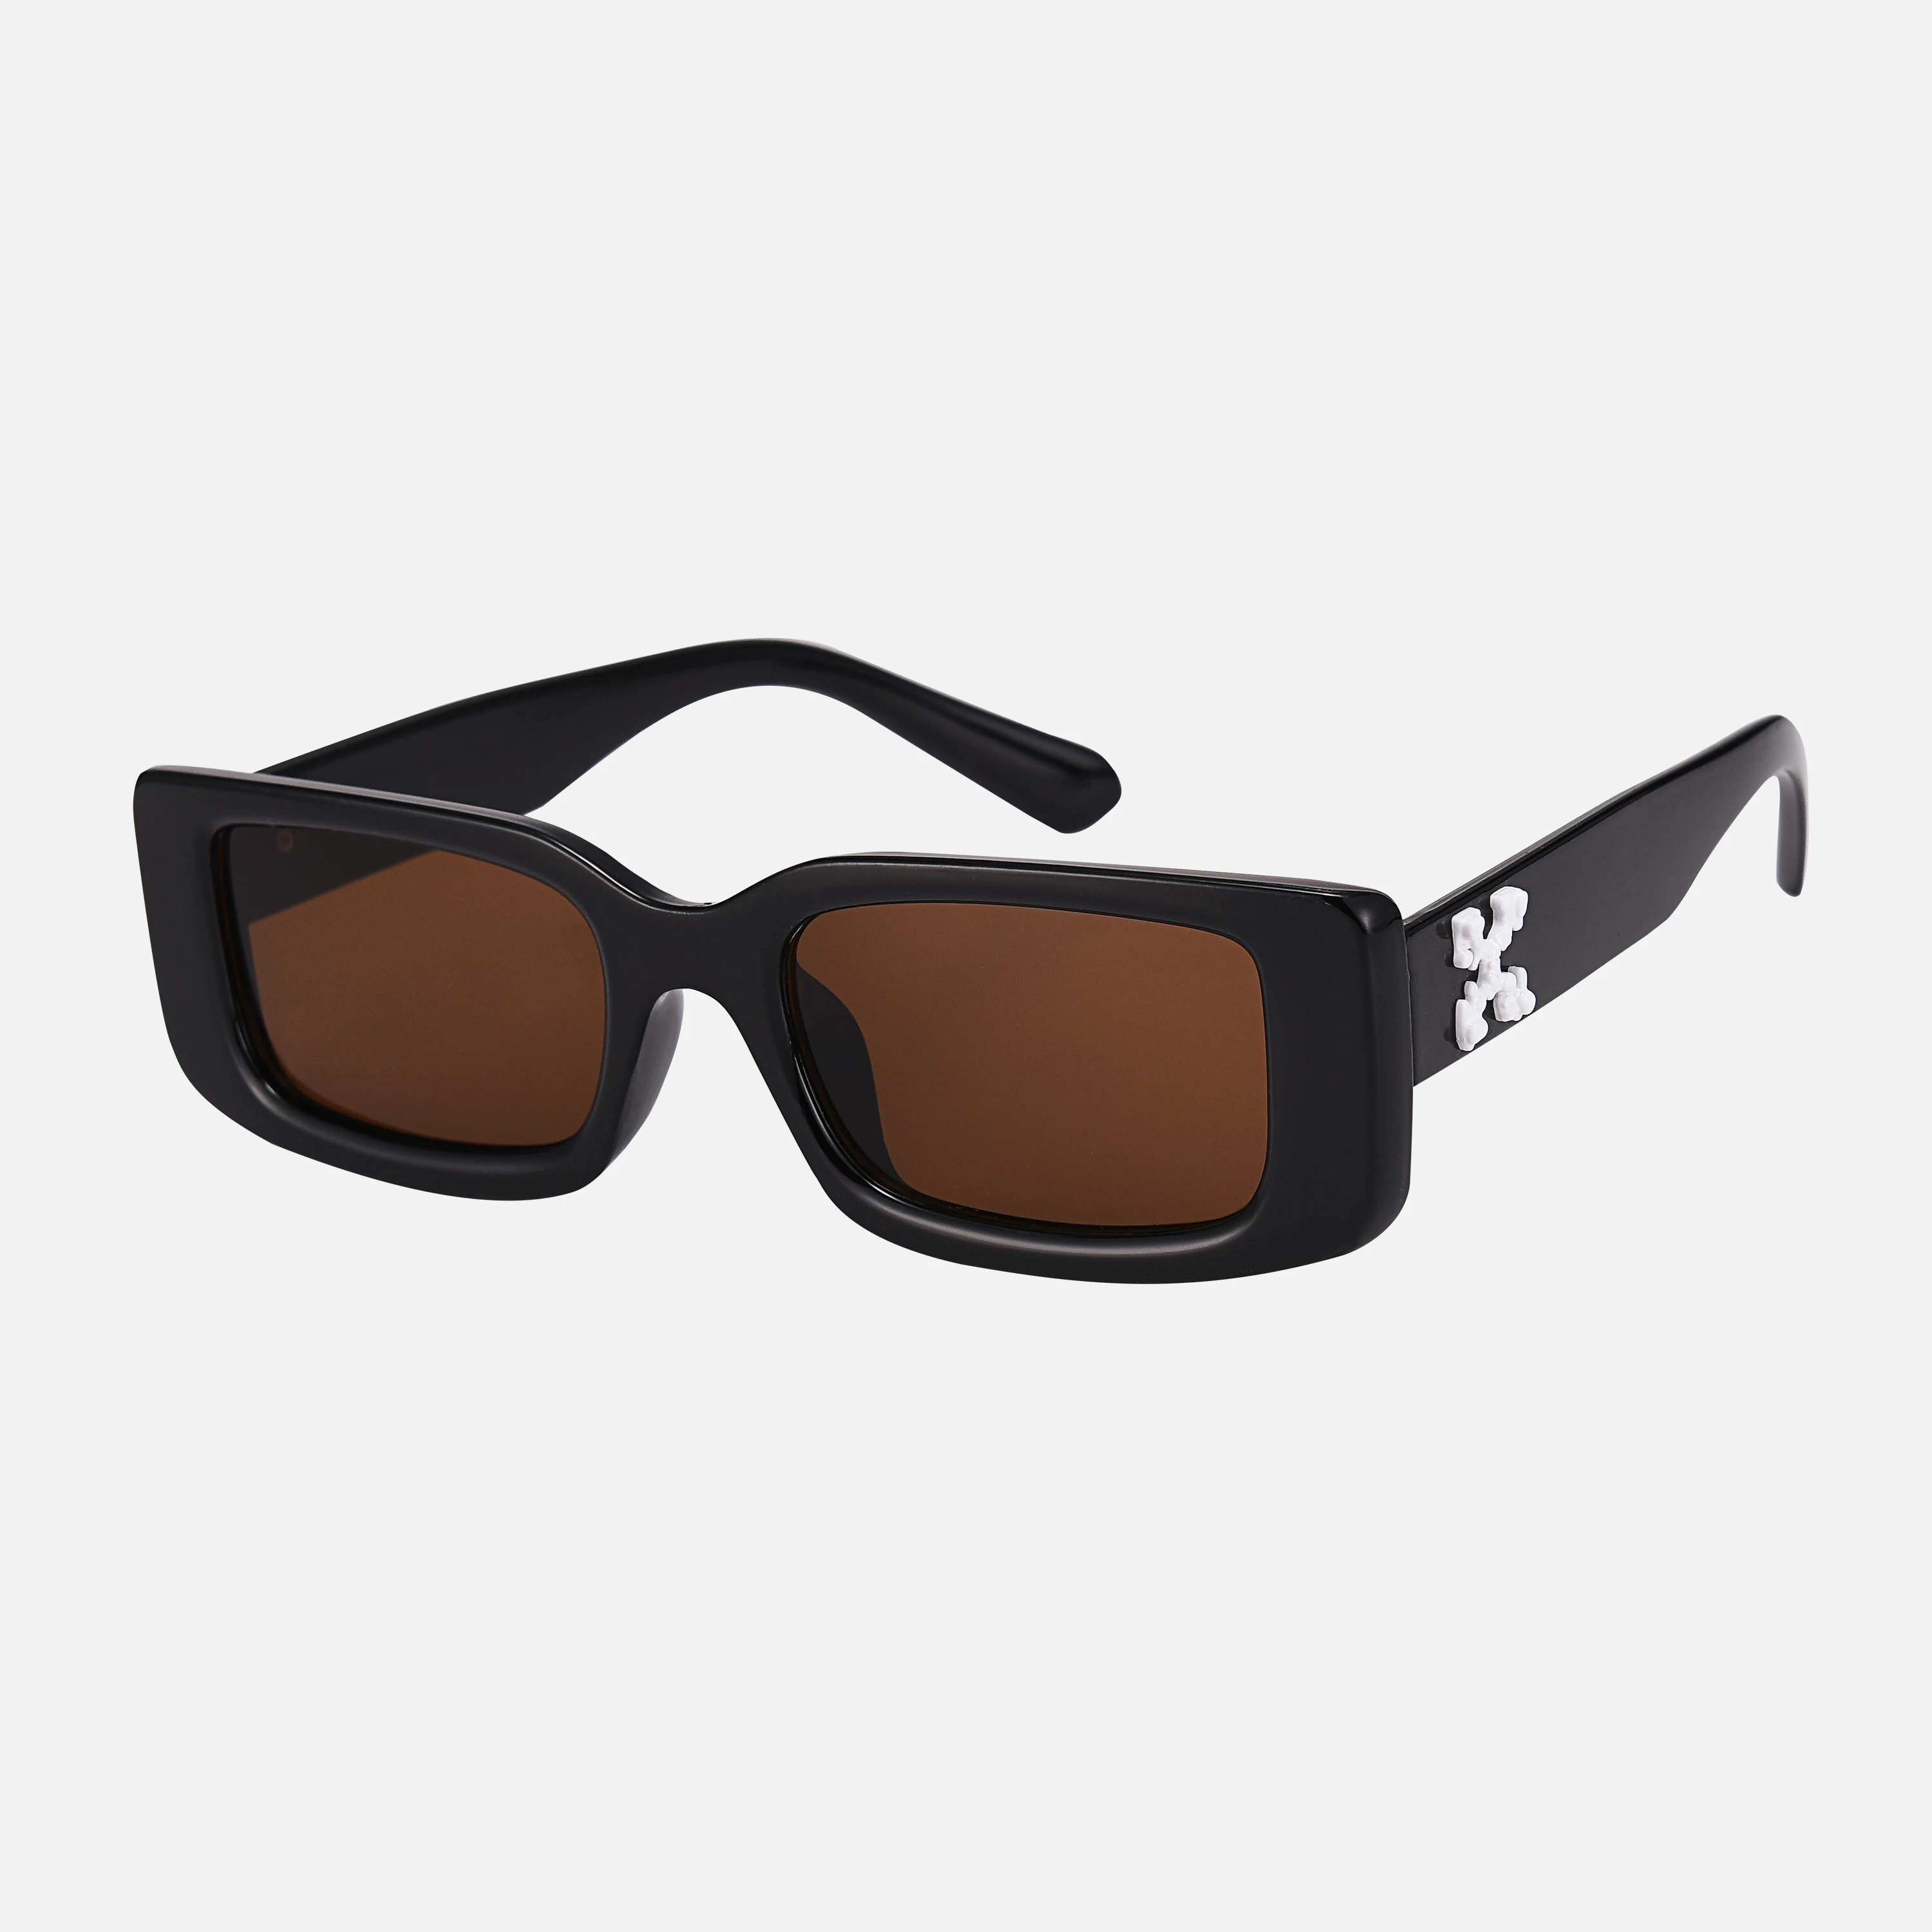 x Sunglass Hut curved frames sunglasses